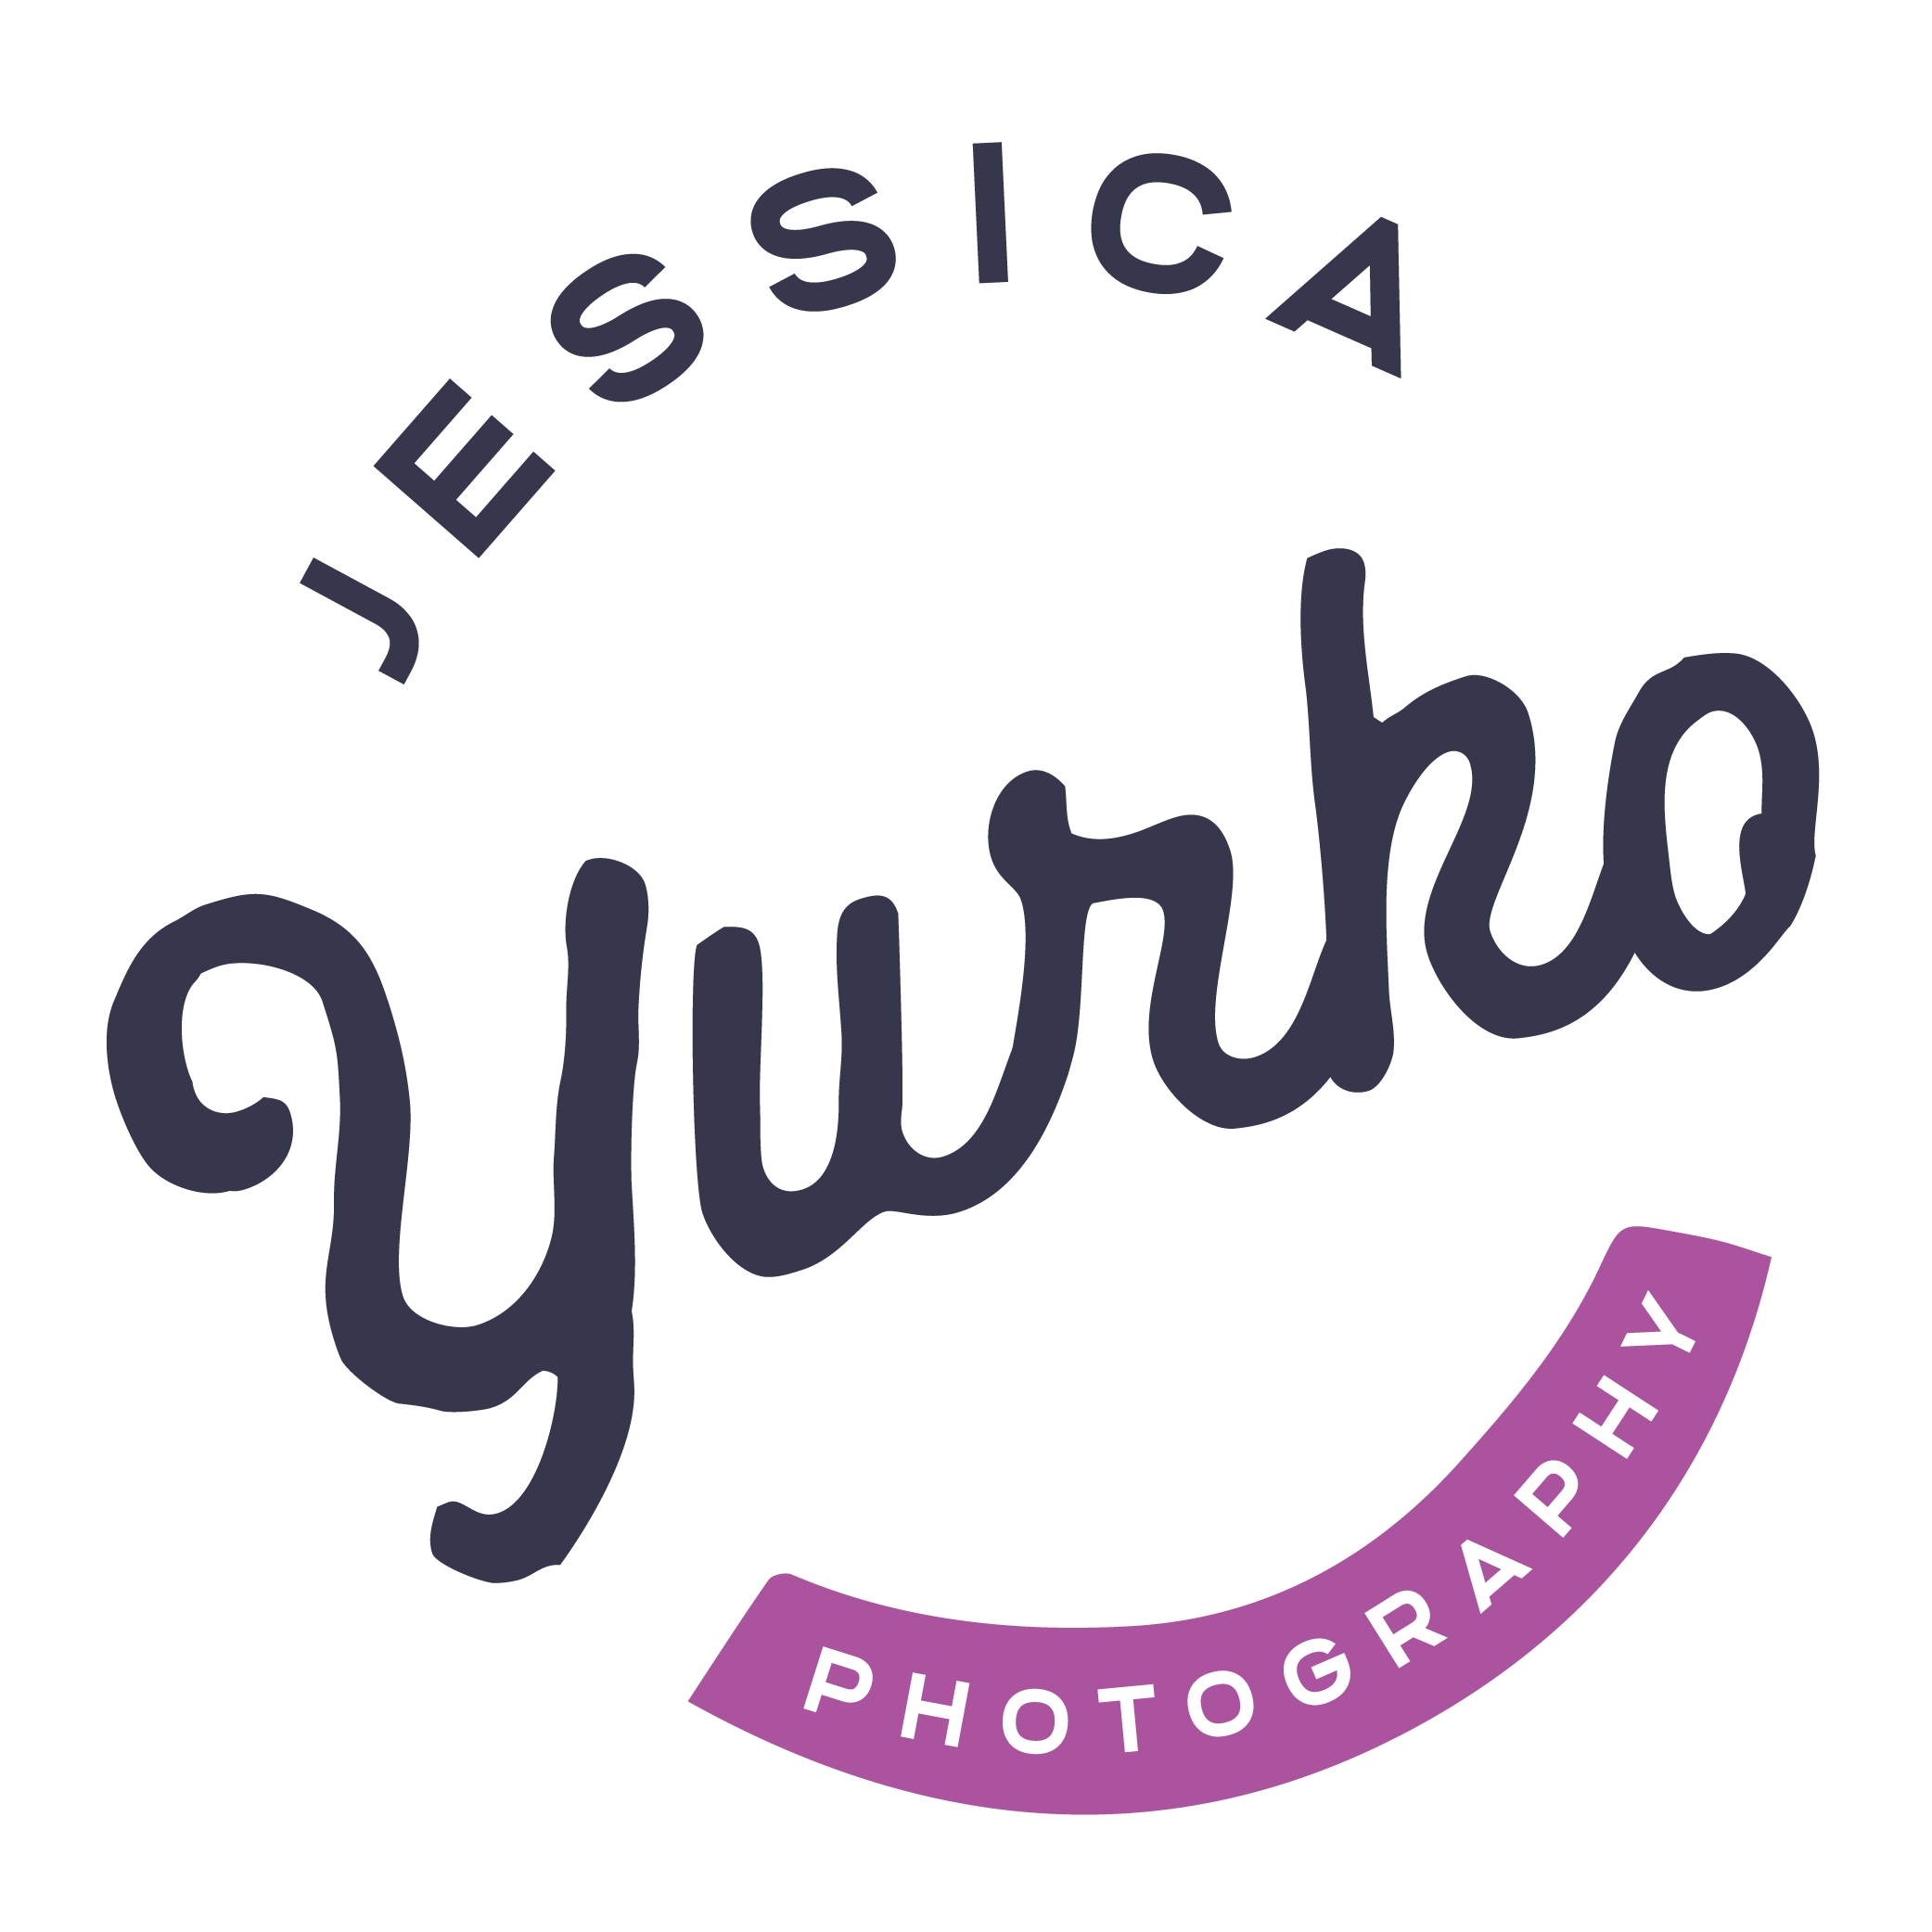 Jessica Yurko Photography